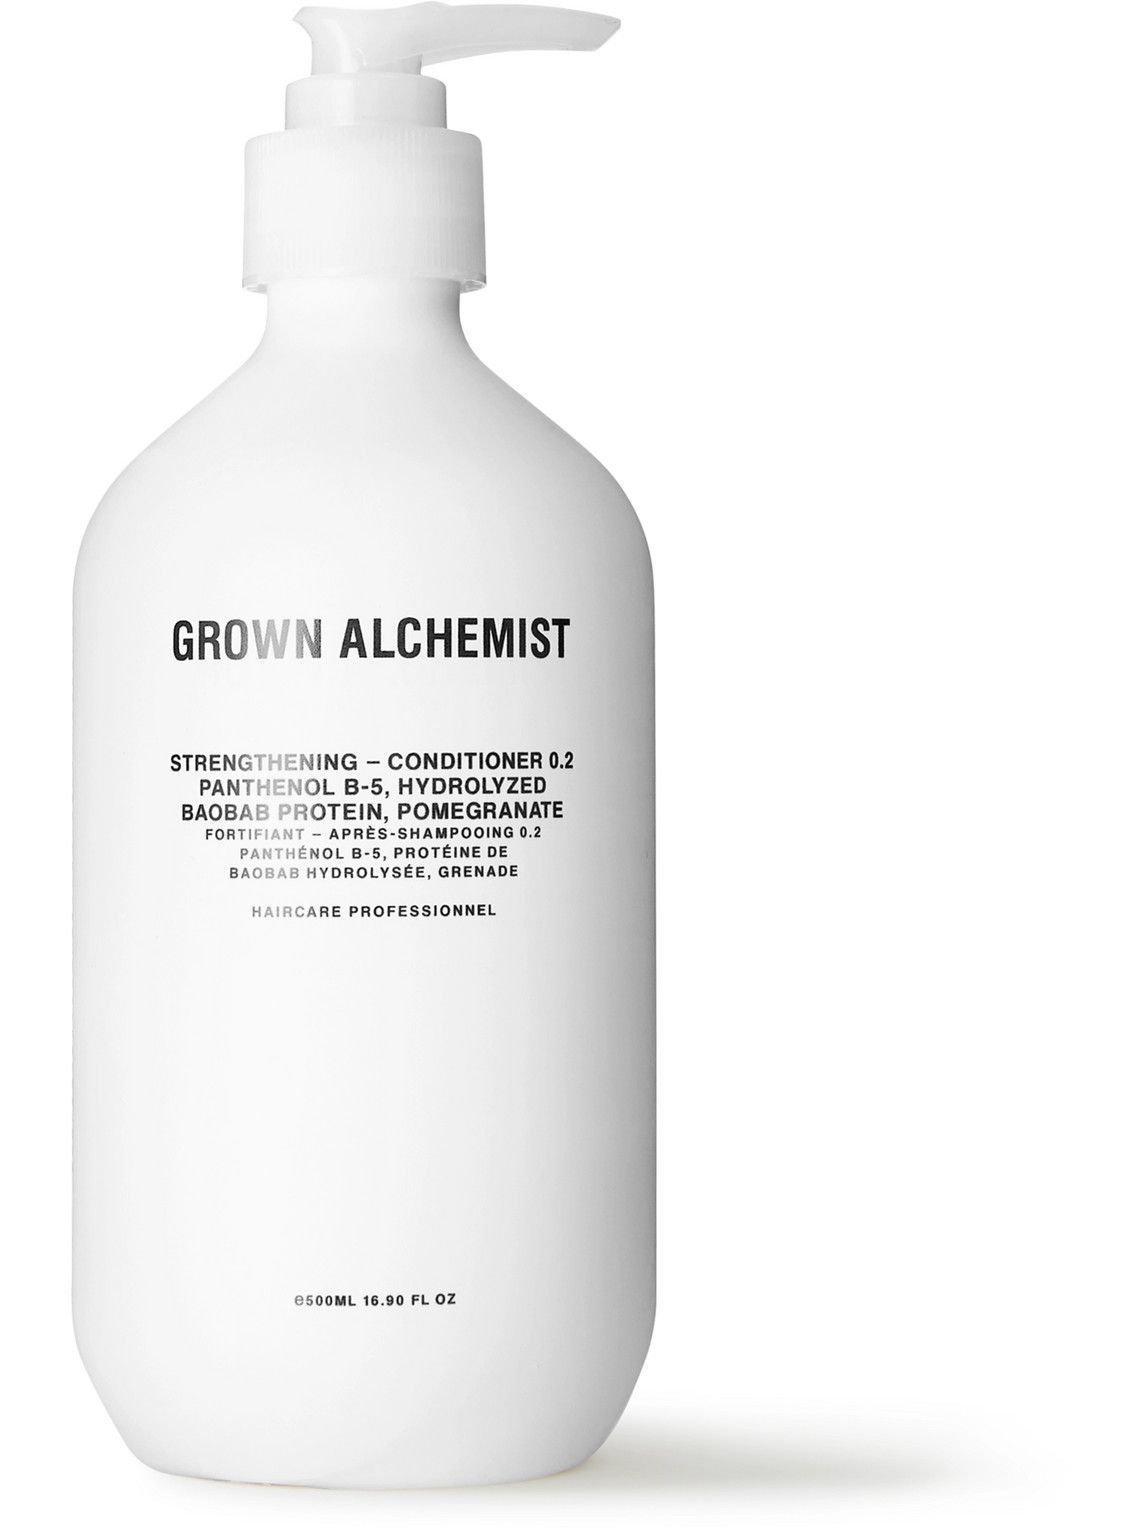 Grown Alchemist - Hand Grown Colorless Care Alchemist Kit 